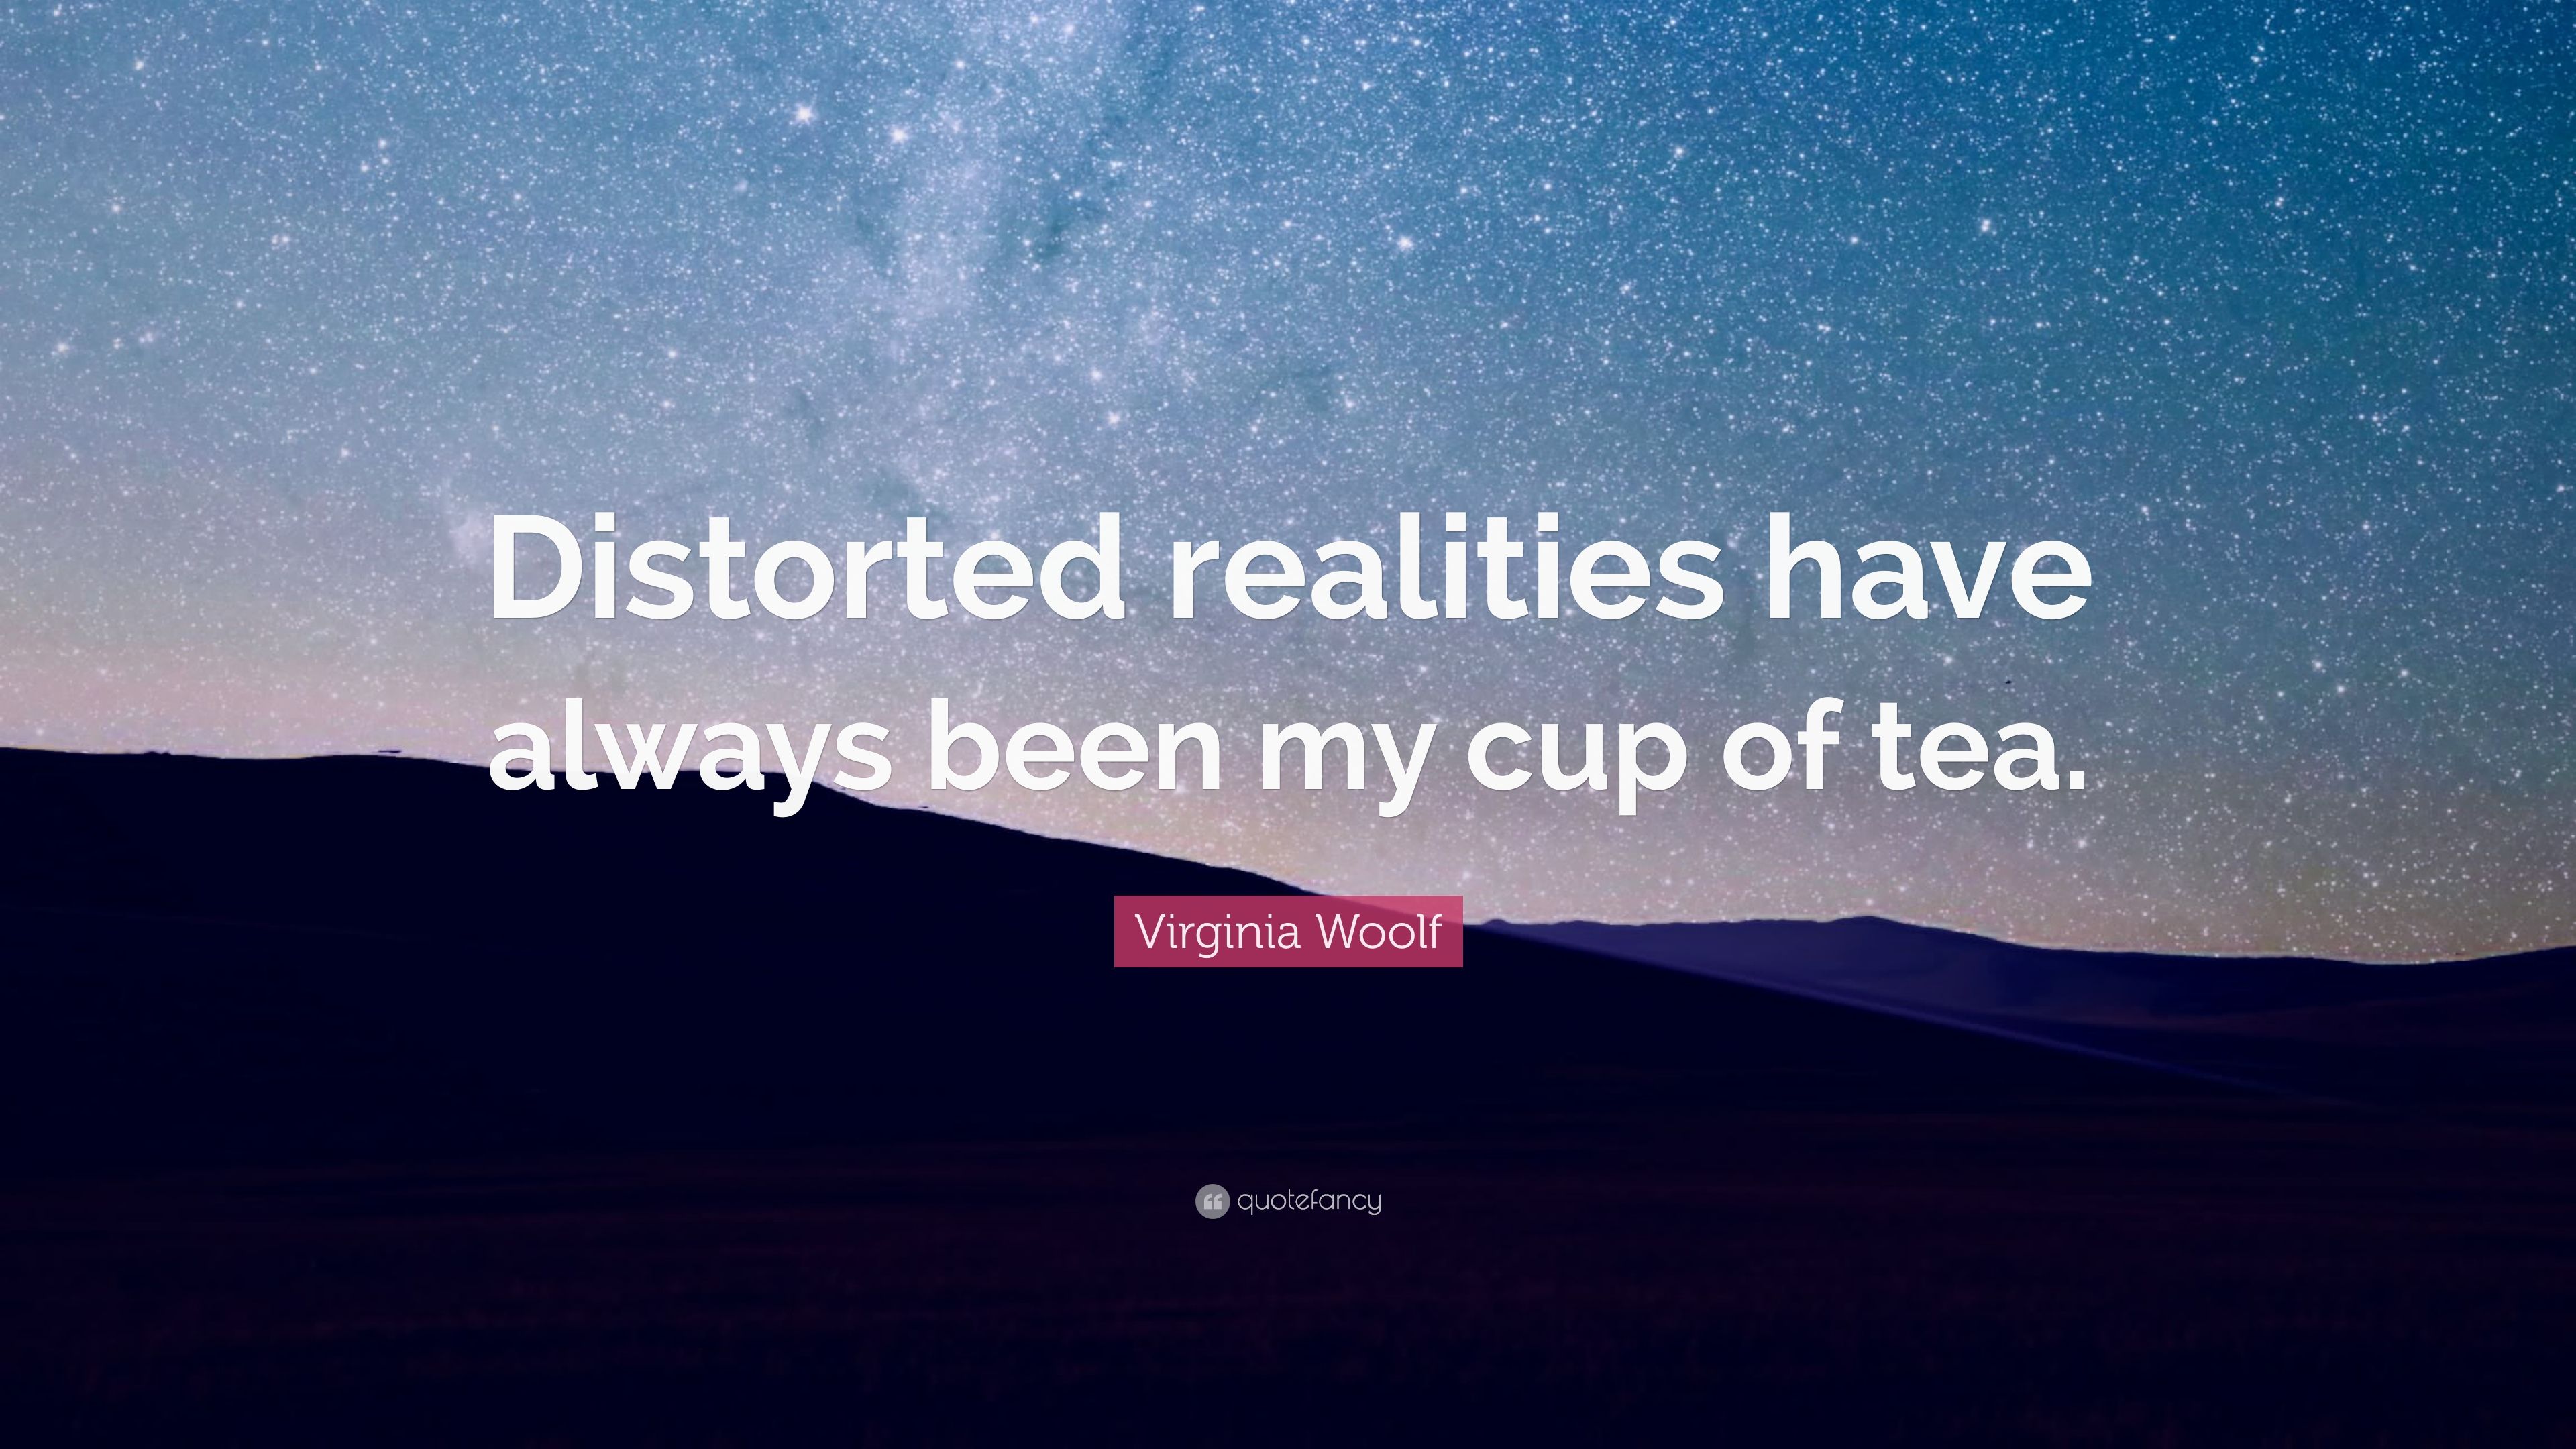 Virginia Woolf Quote: “Distorted realities have always been my cup